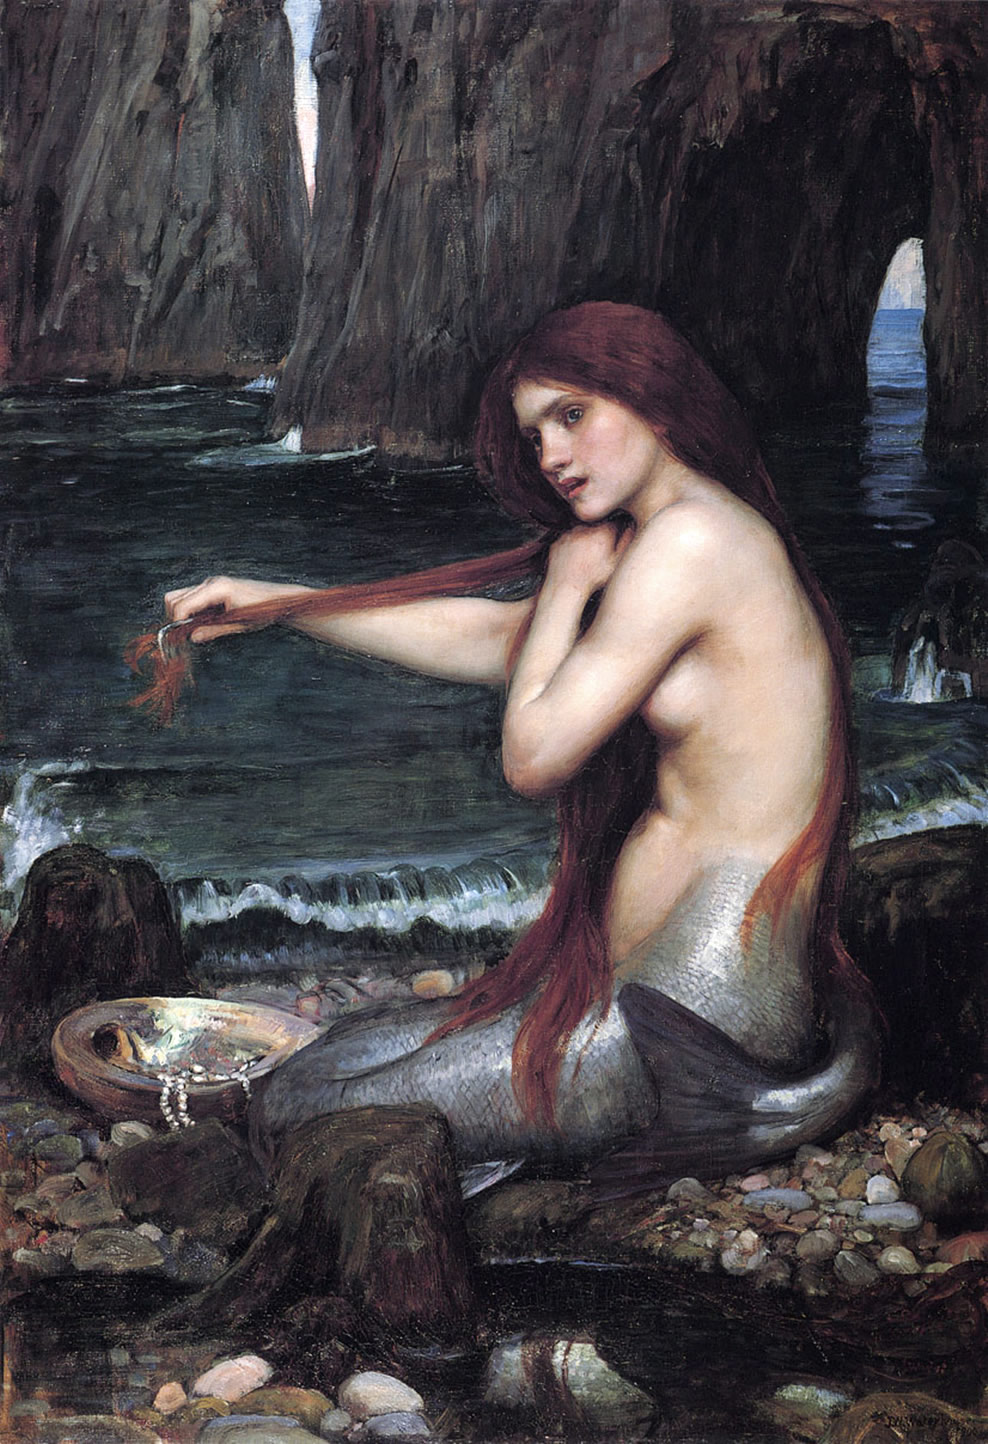 "A Mermaid" by John William Waterhouse, 1905.